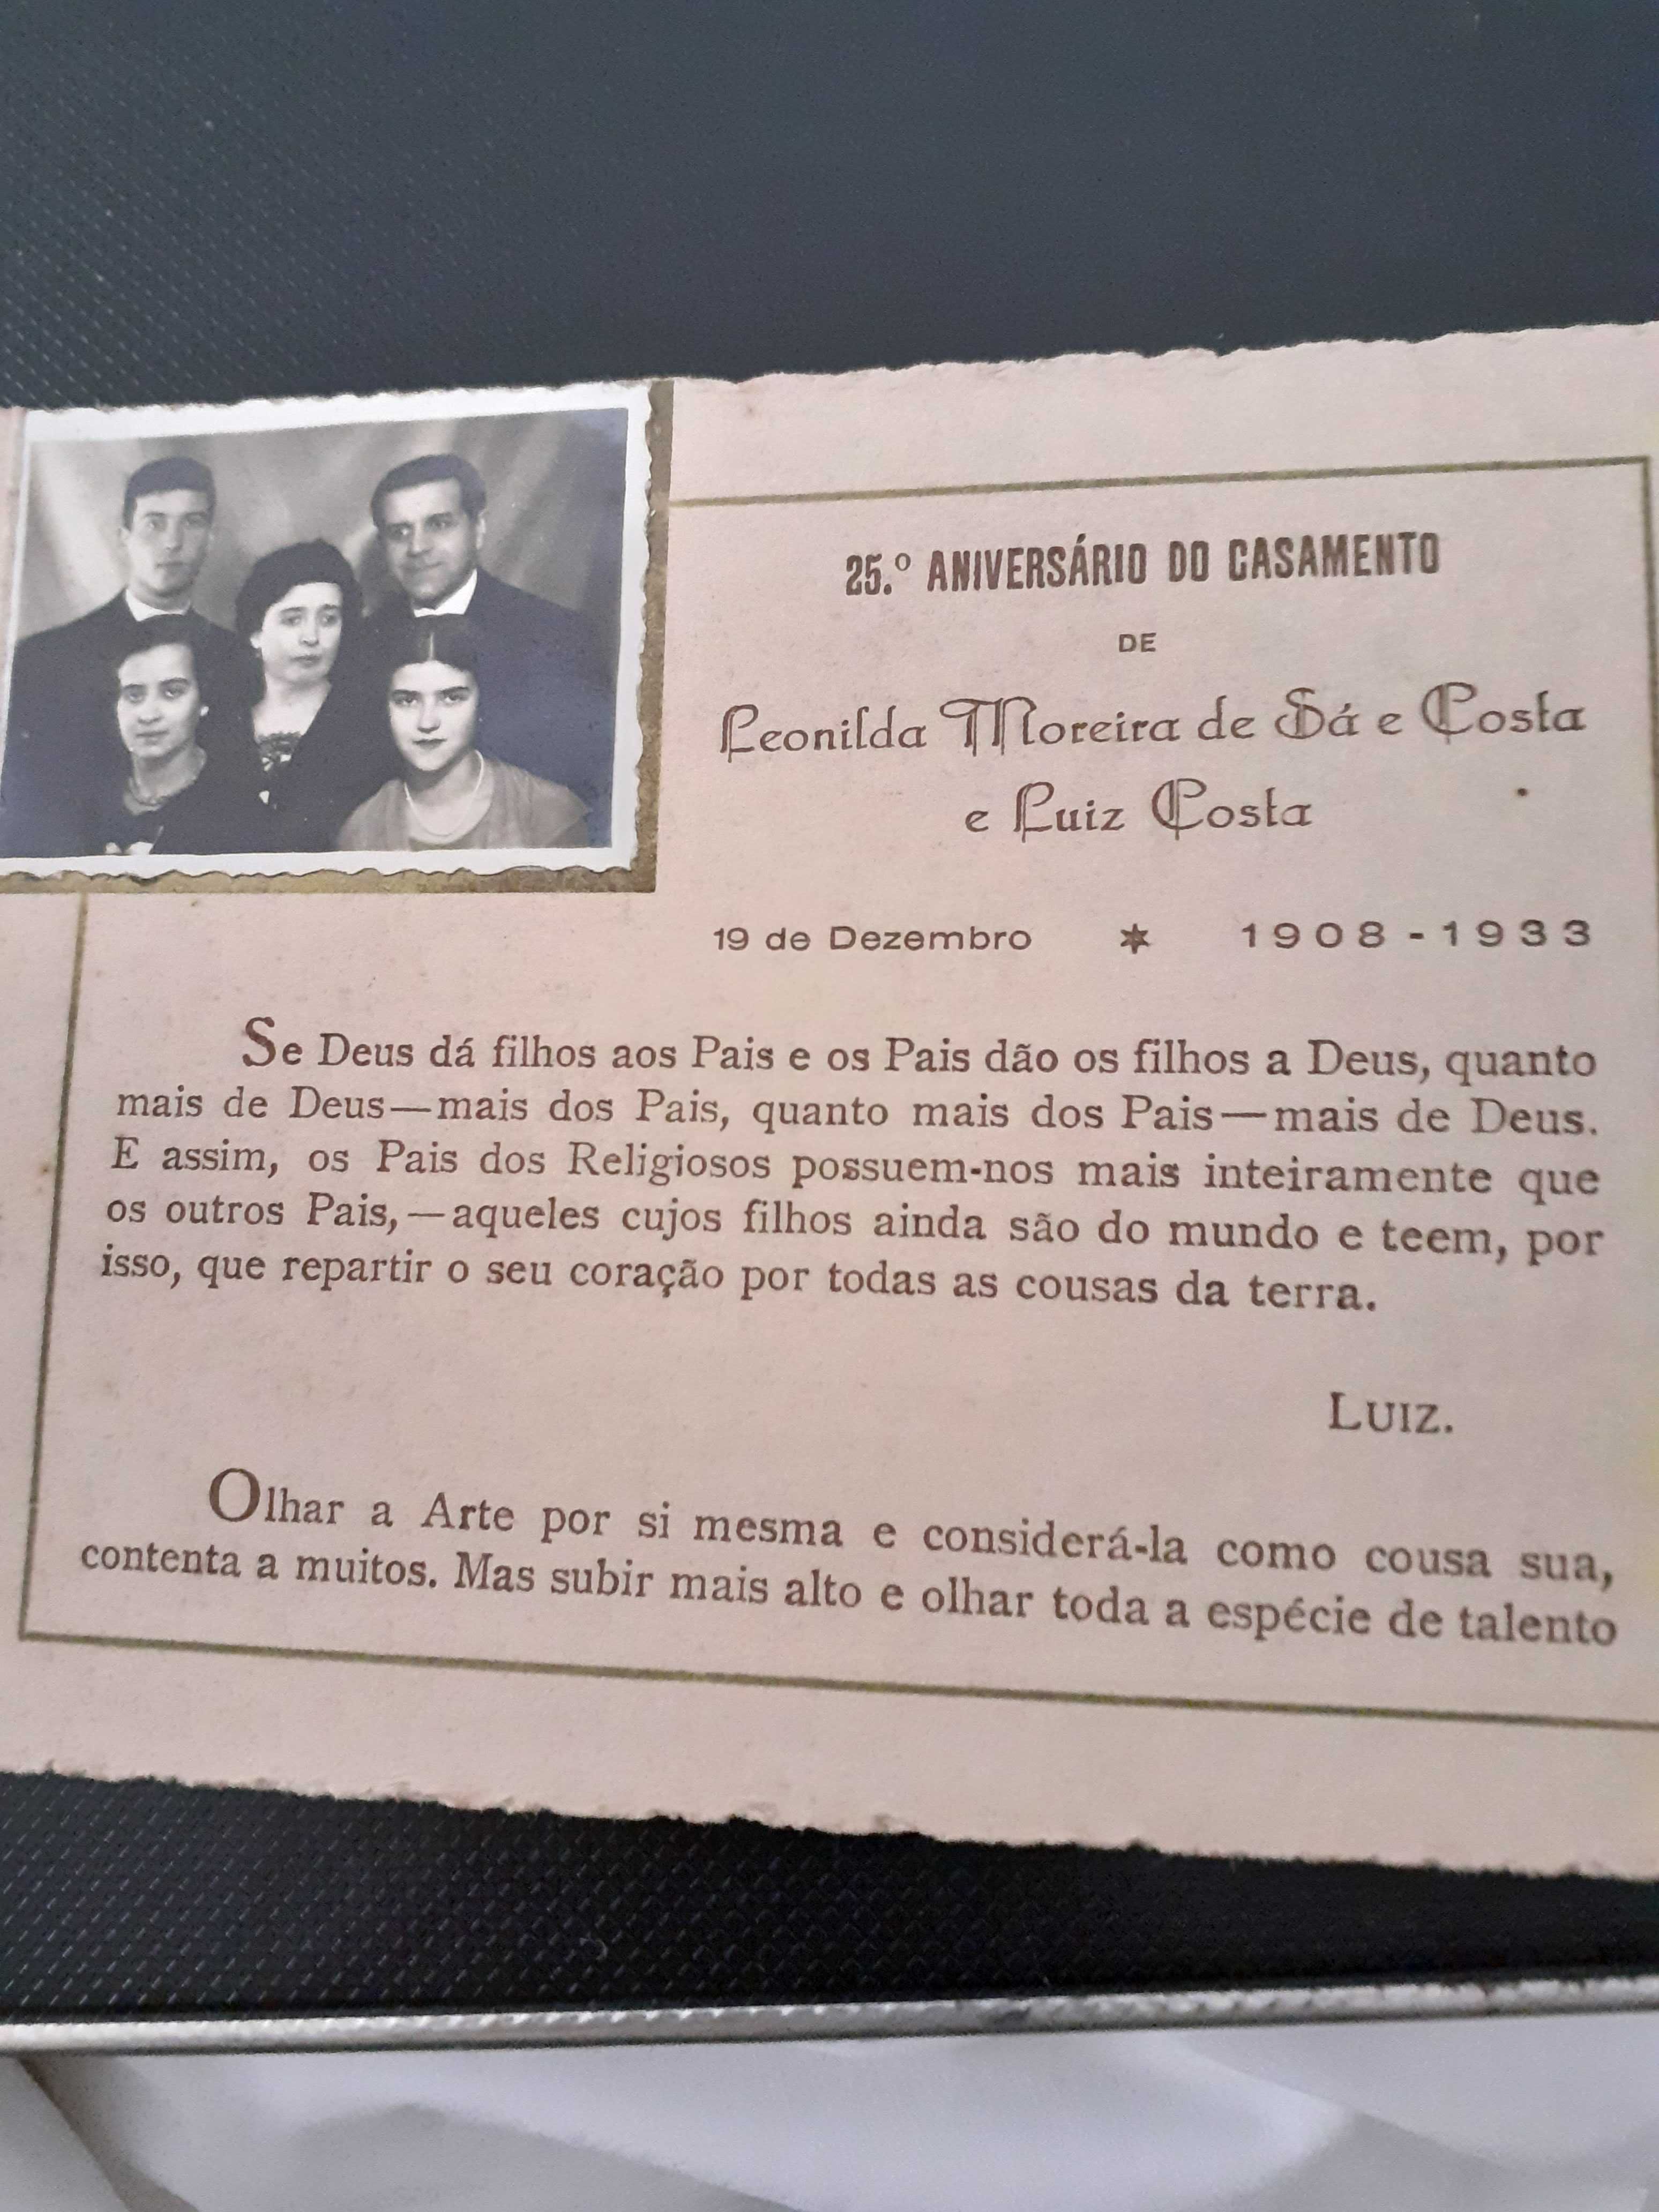 CASAMENTO boletim de 1934 e cartao de festejo de 25 anos de casamento